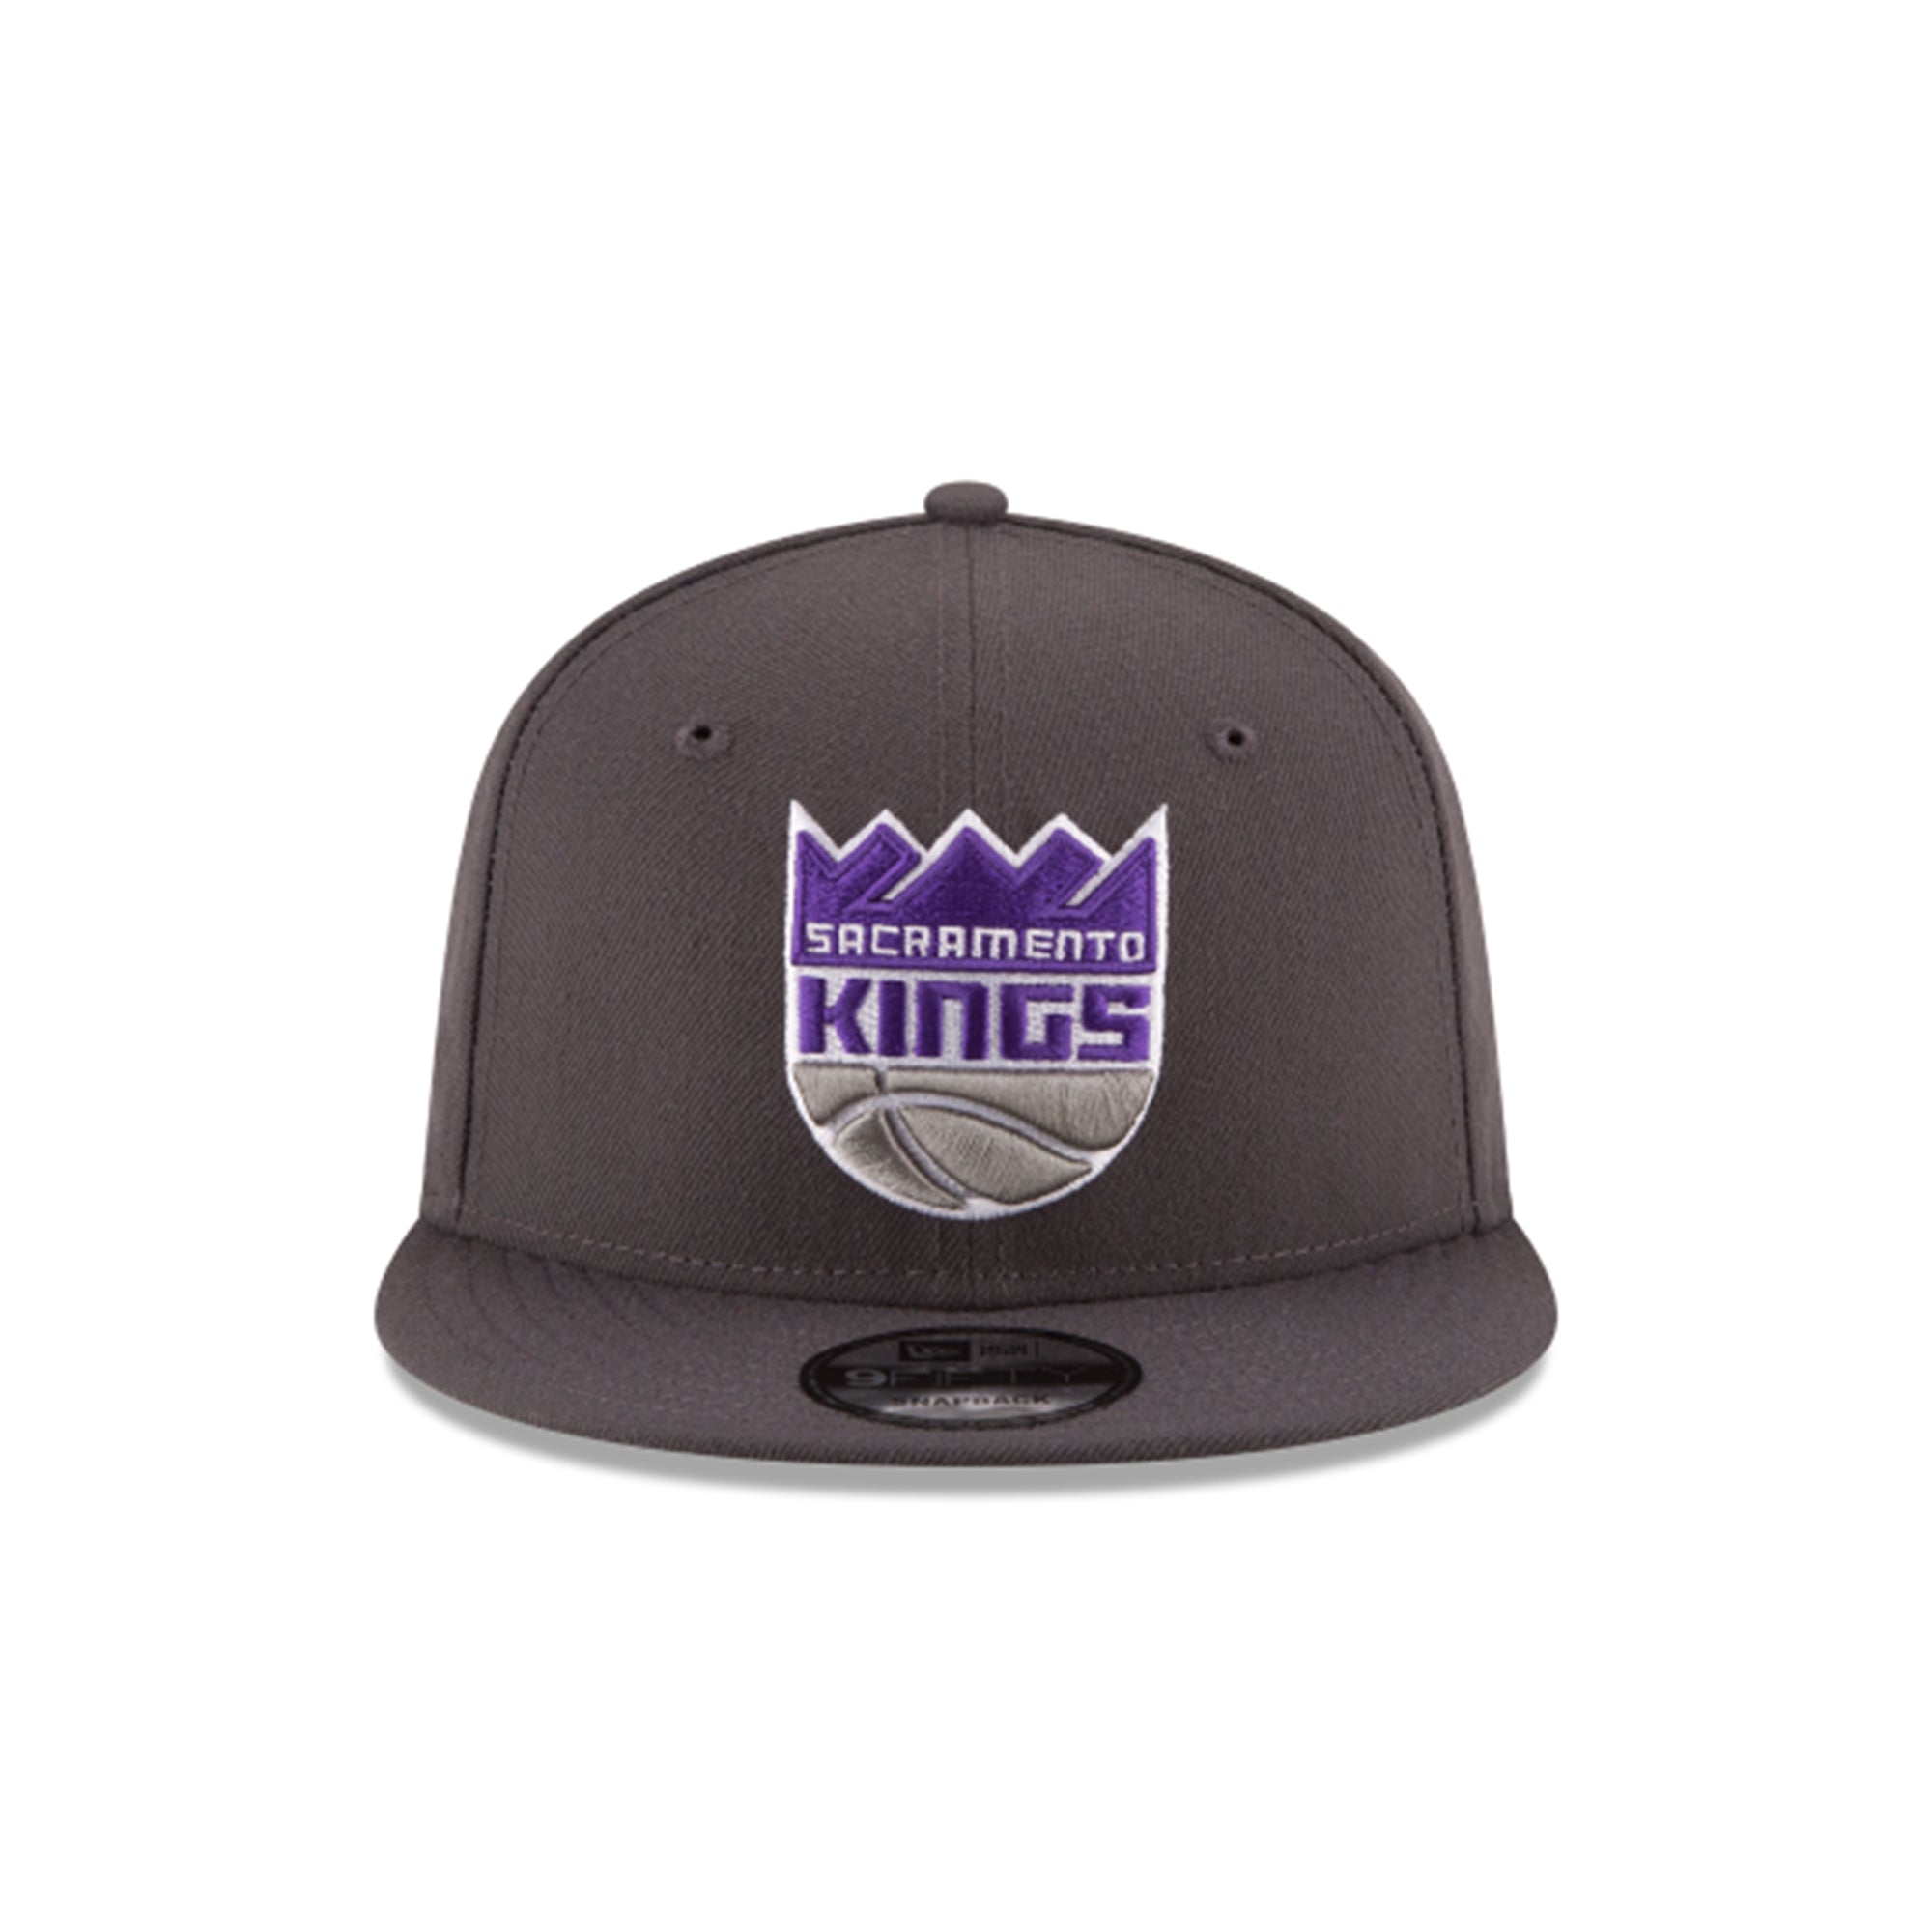 Sacramento Kings New Era Merchandise, Sacramento Kings New Era